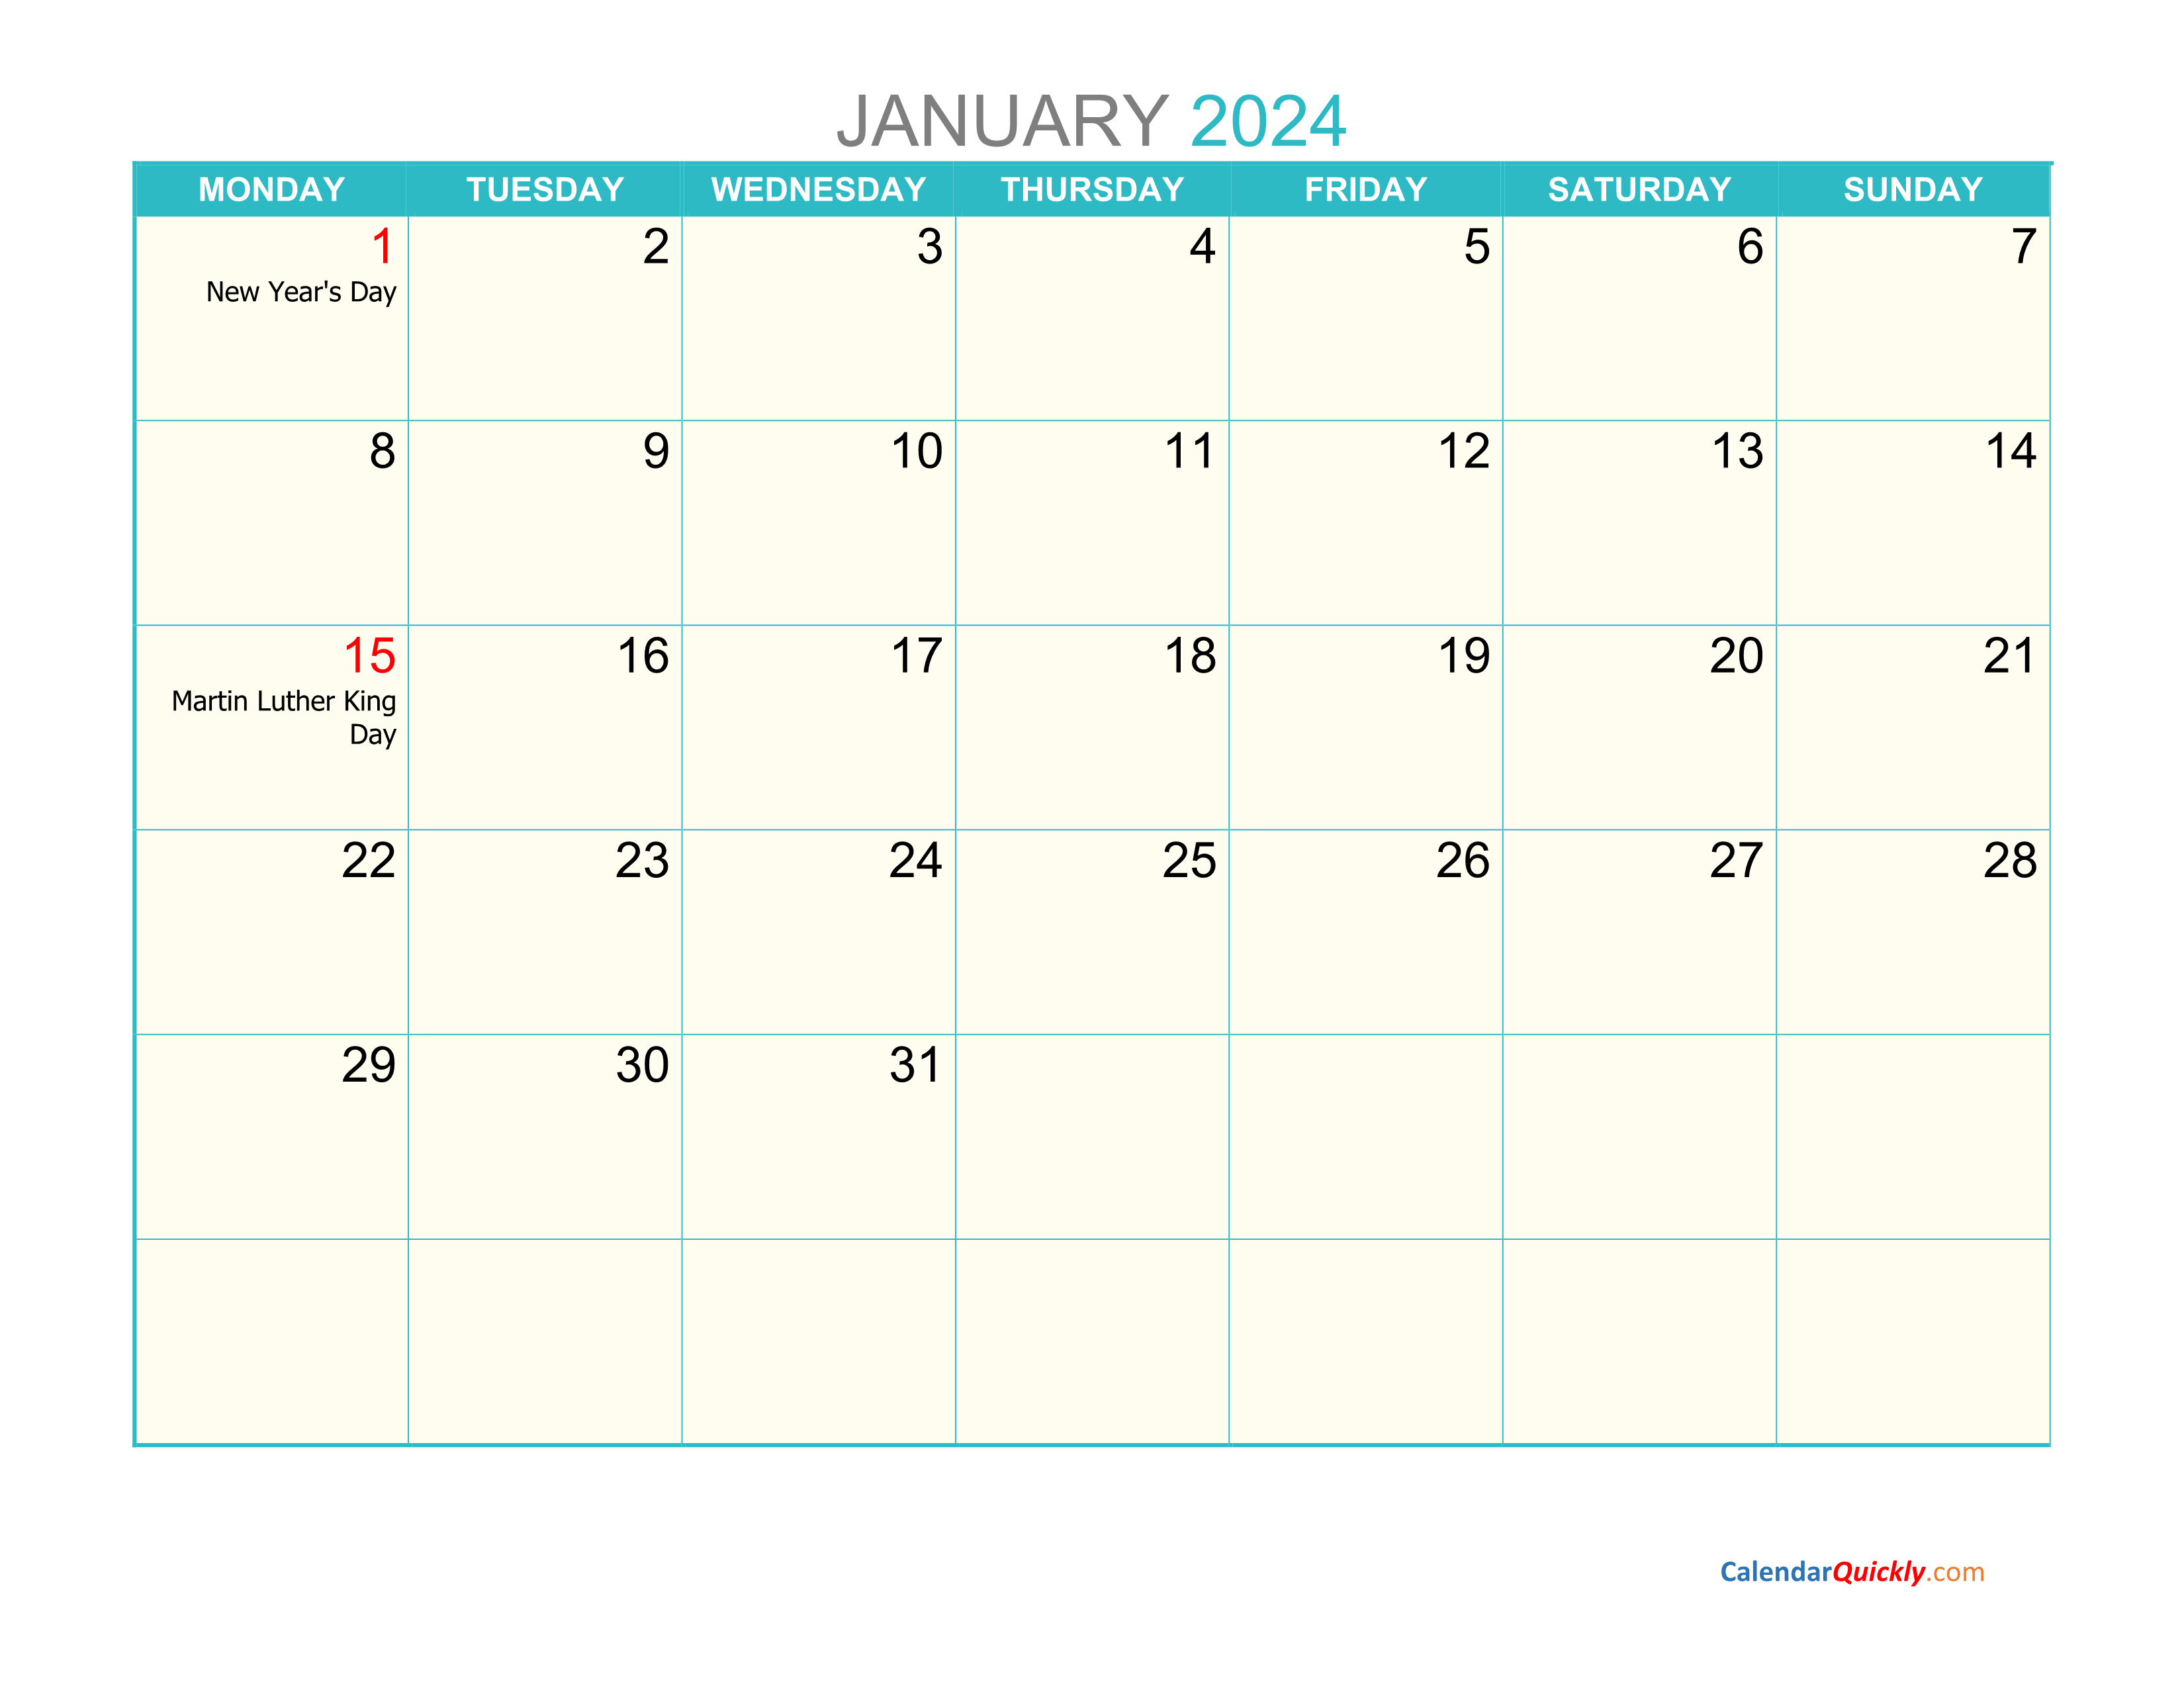 January Monday 2024 Calendar Printable Calendar Quickly - Free Printable 2024 Monthly Calendar With Monday Start